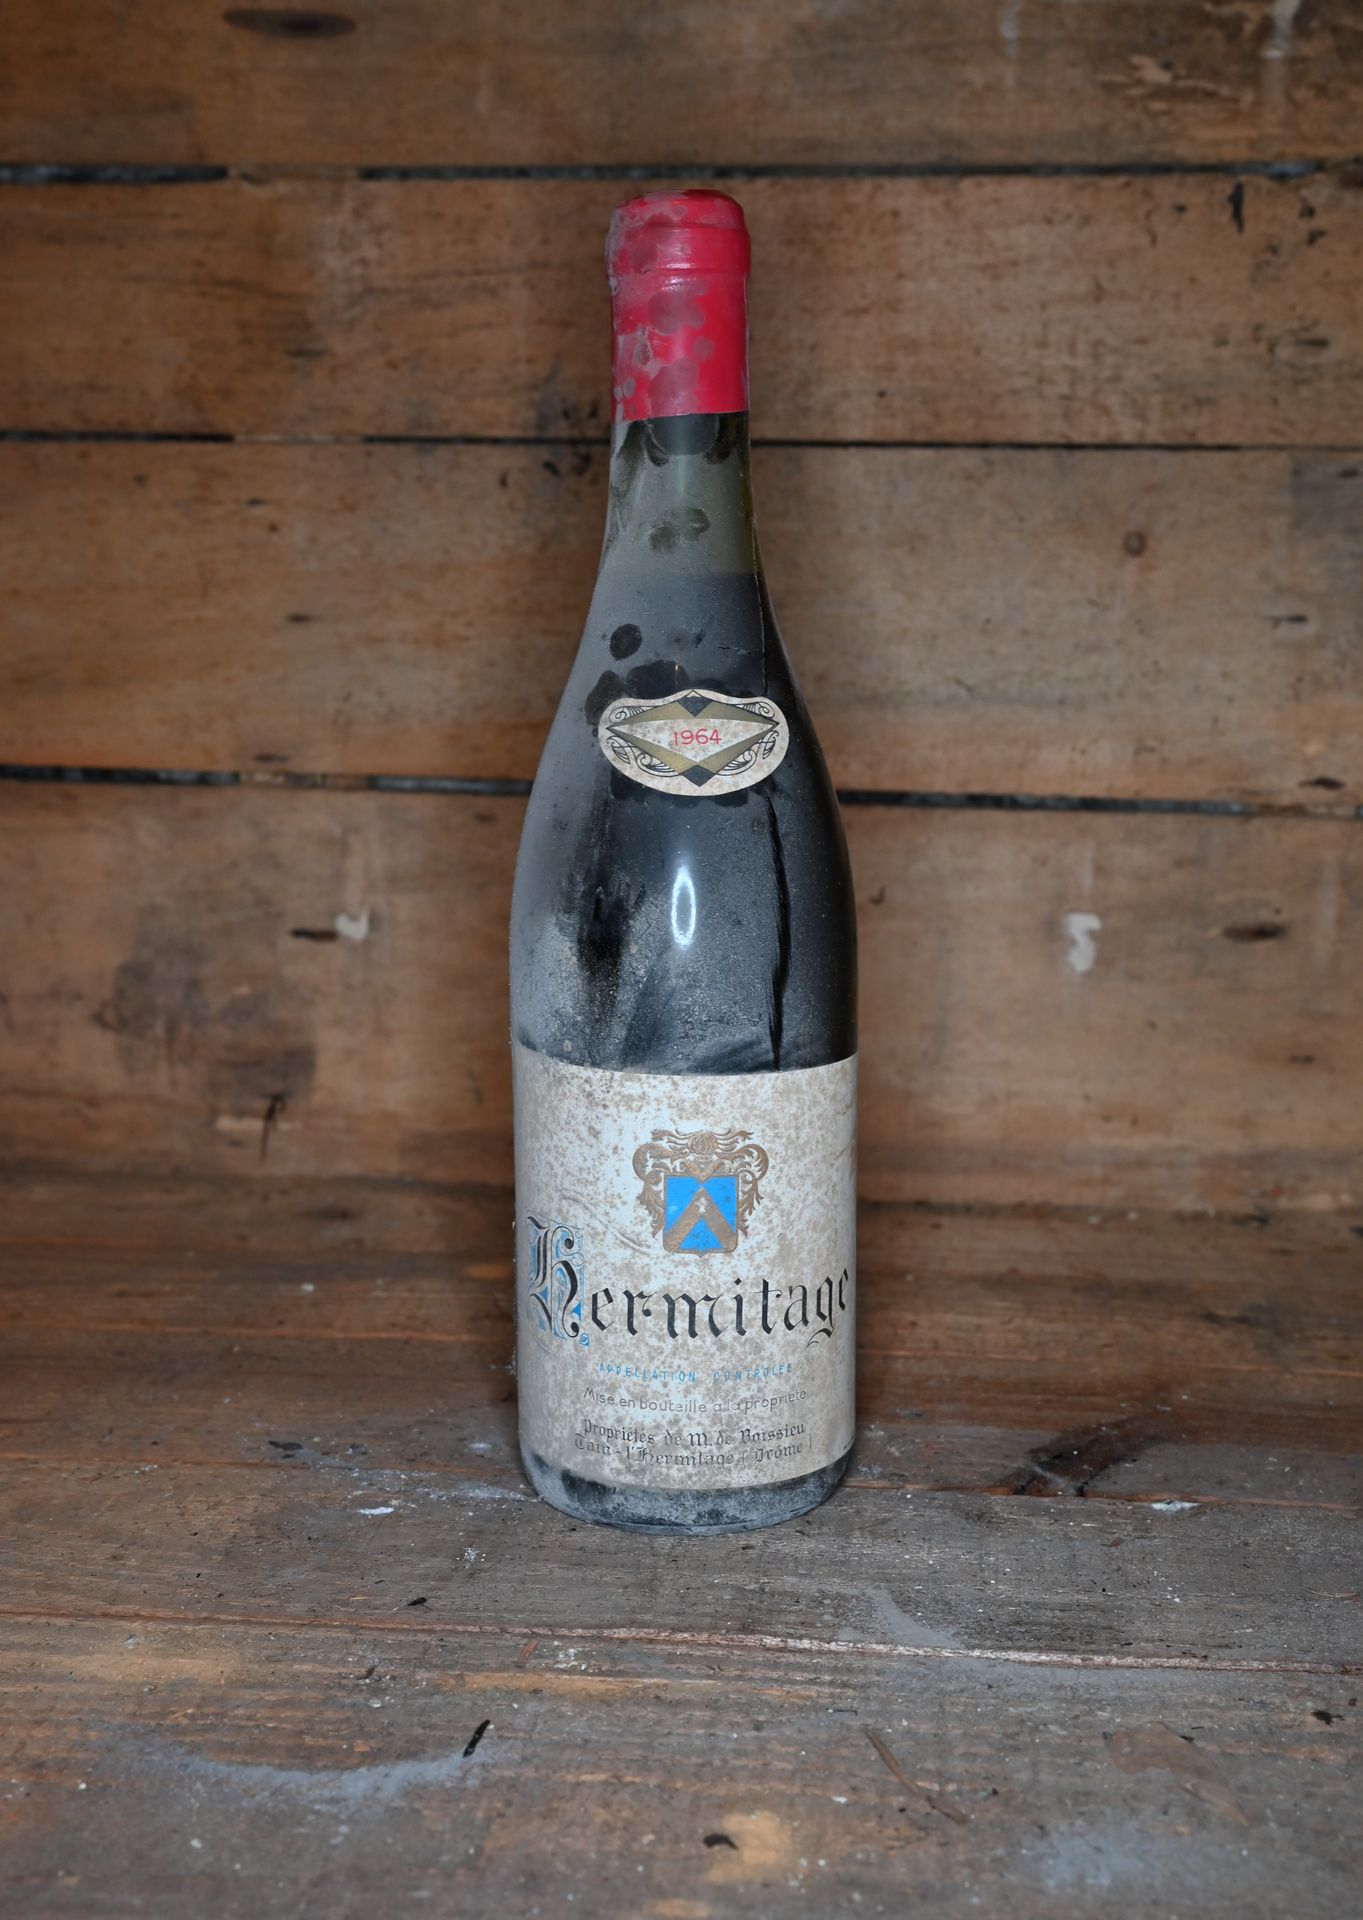 Null 8 瓶 Hermitage 红葡萄酒 Marquis de Buissieu 1964。

对标签、瓶塞或瓶子或马格南酒瓶的状况不作任何投诉。